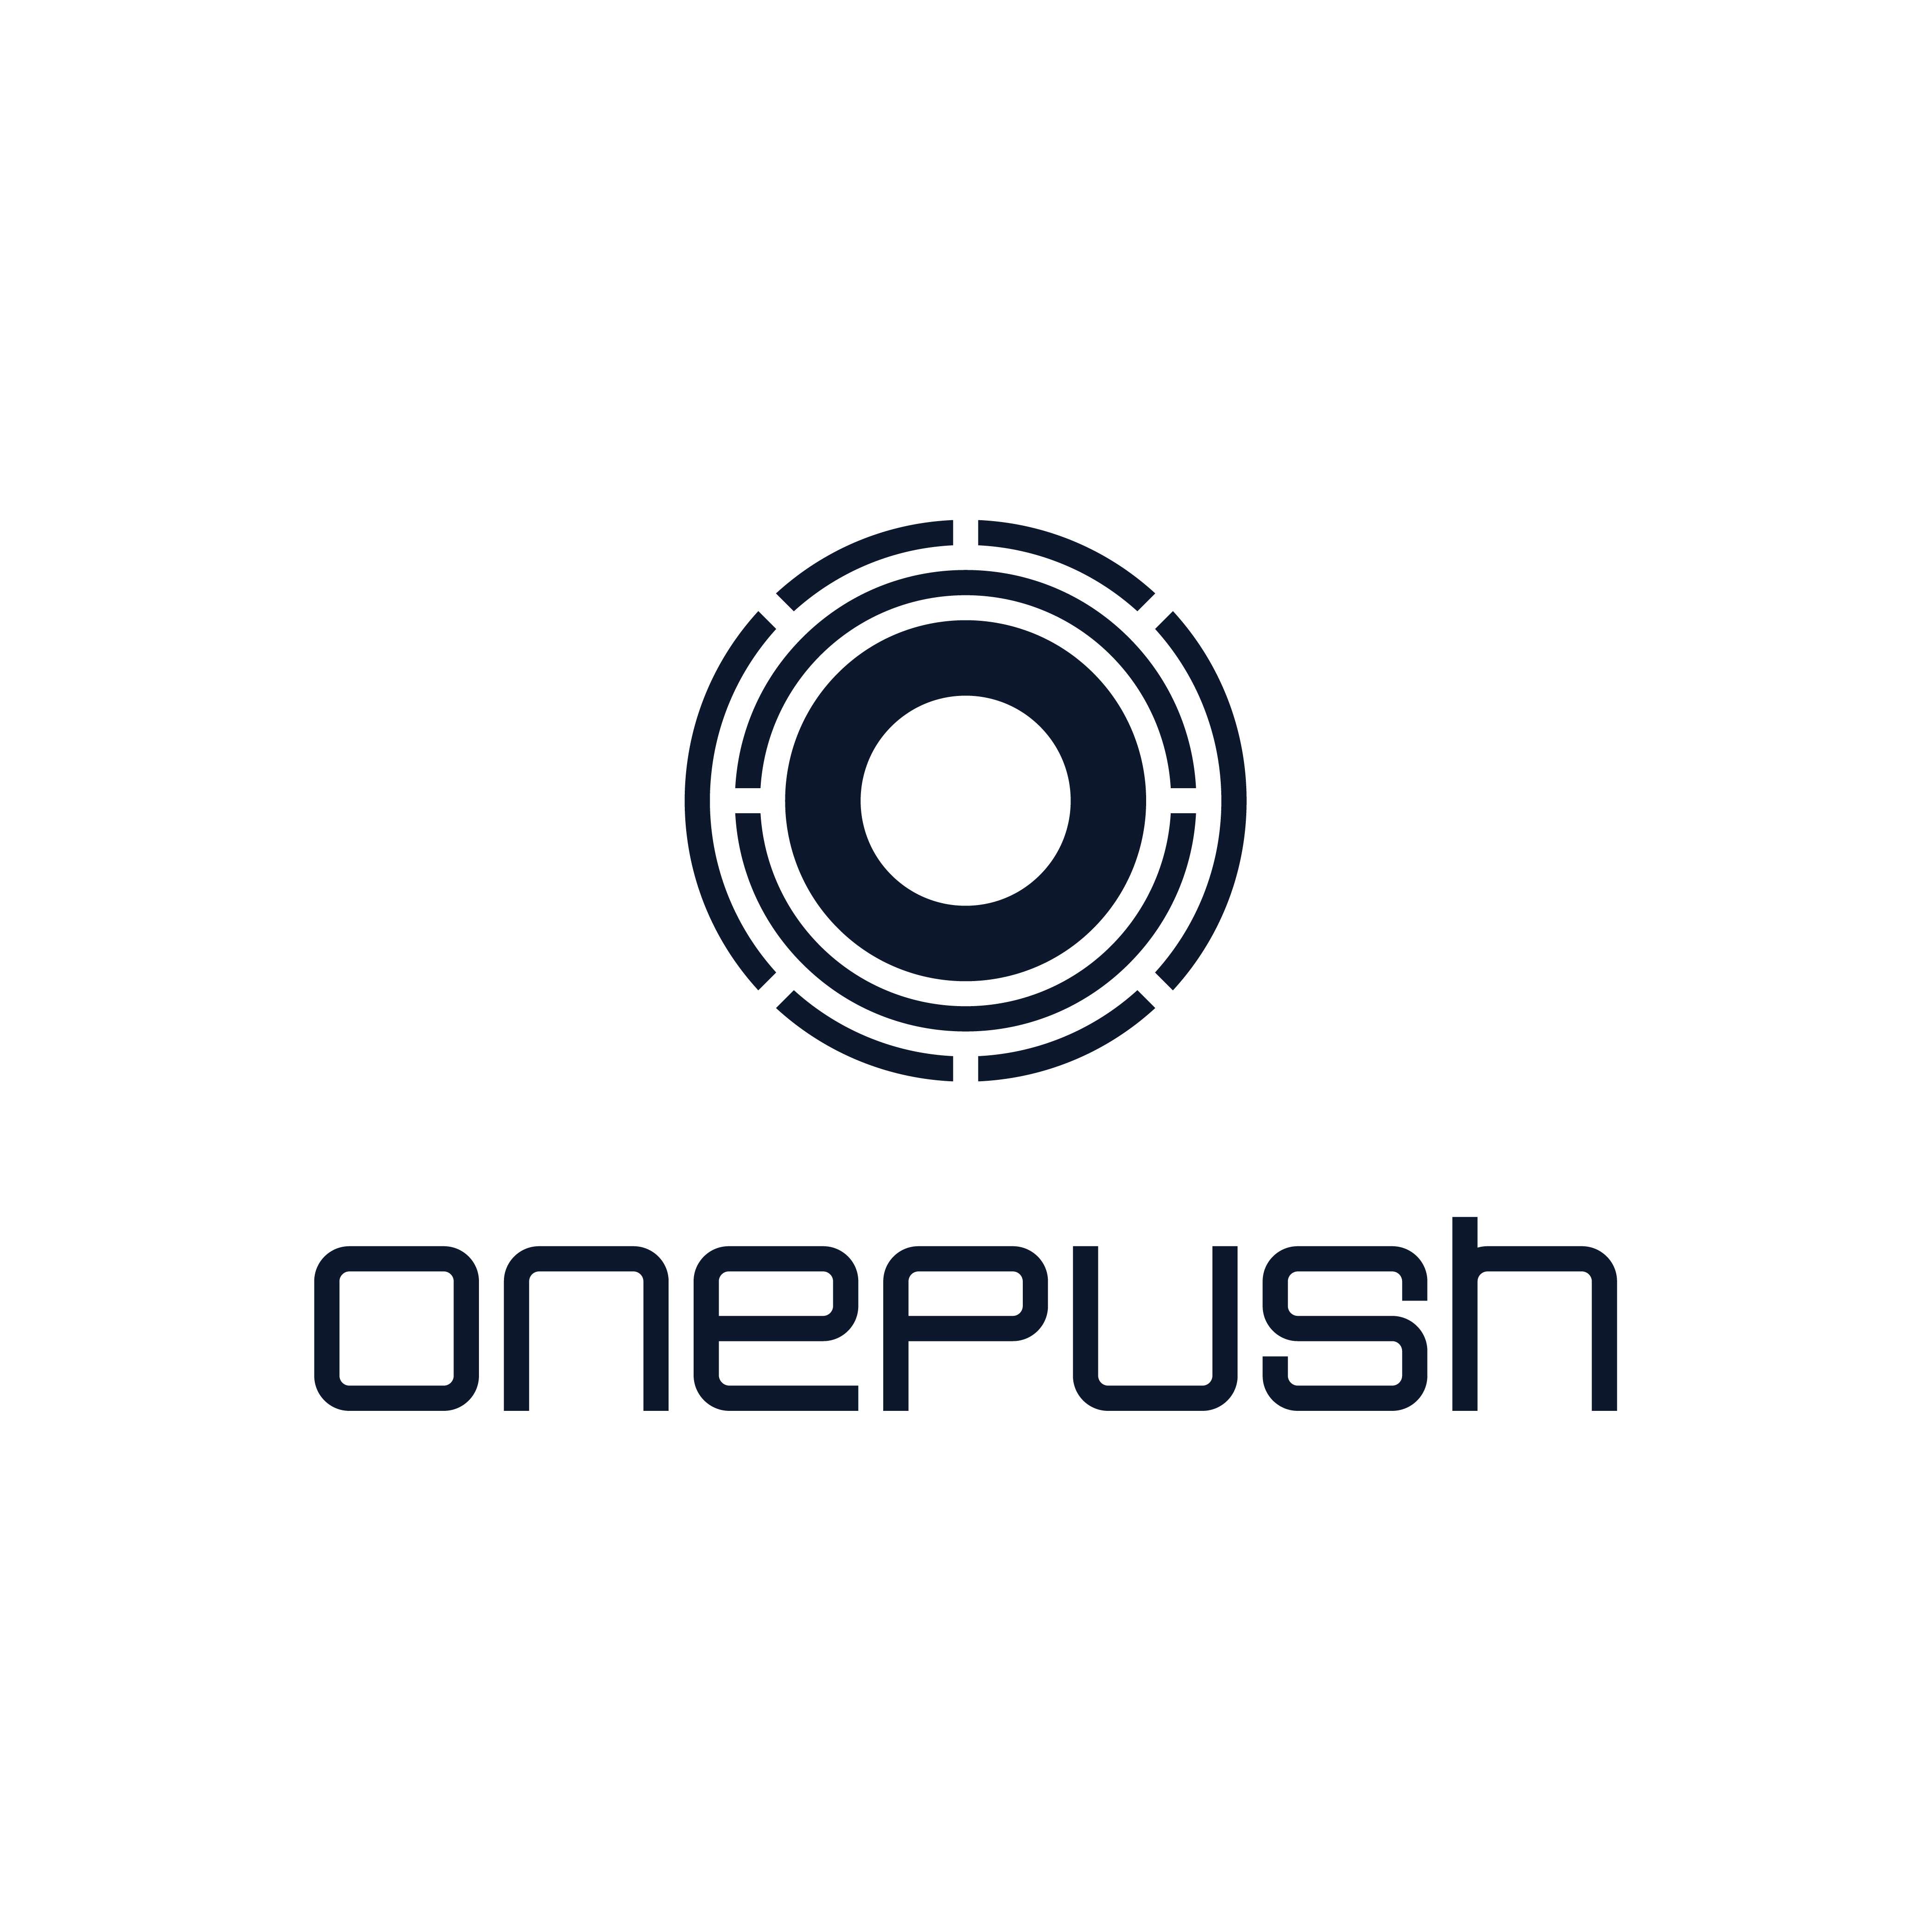 Onepush logo